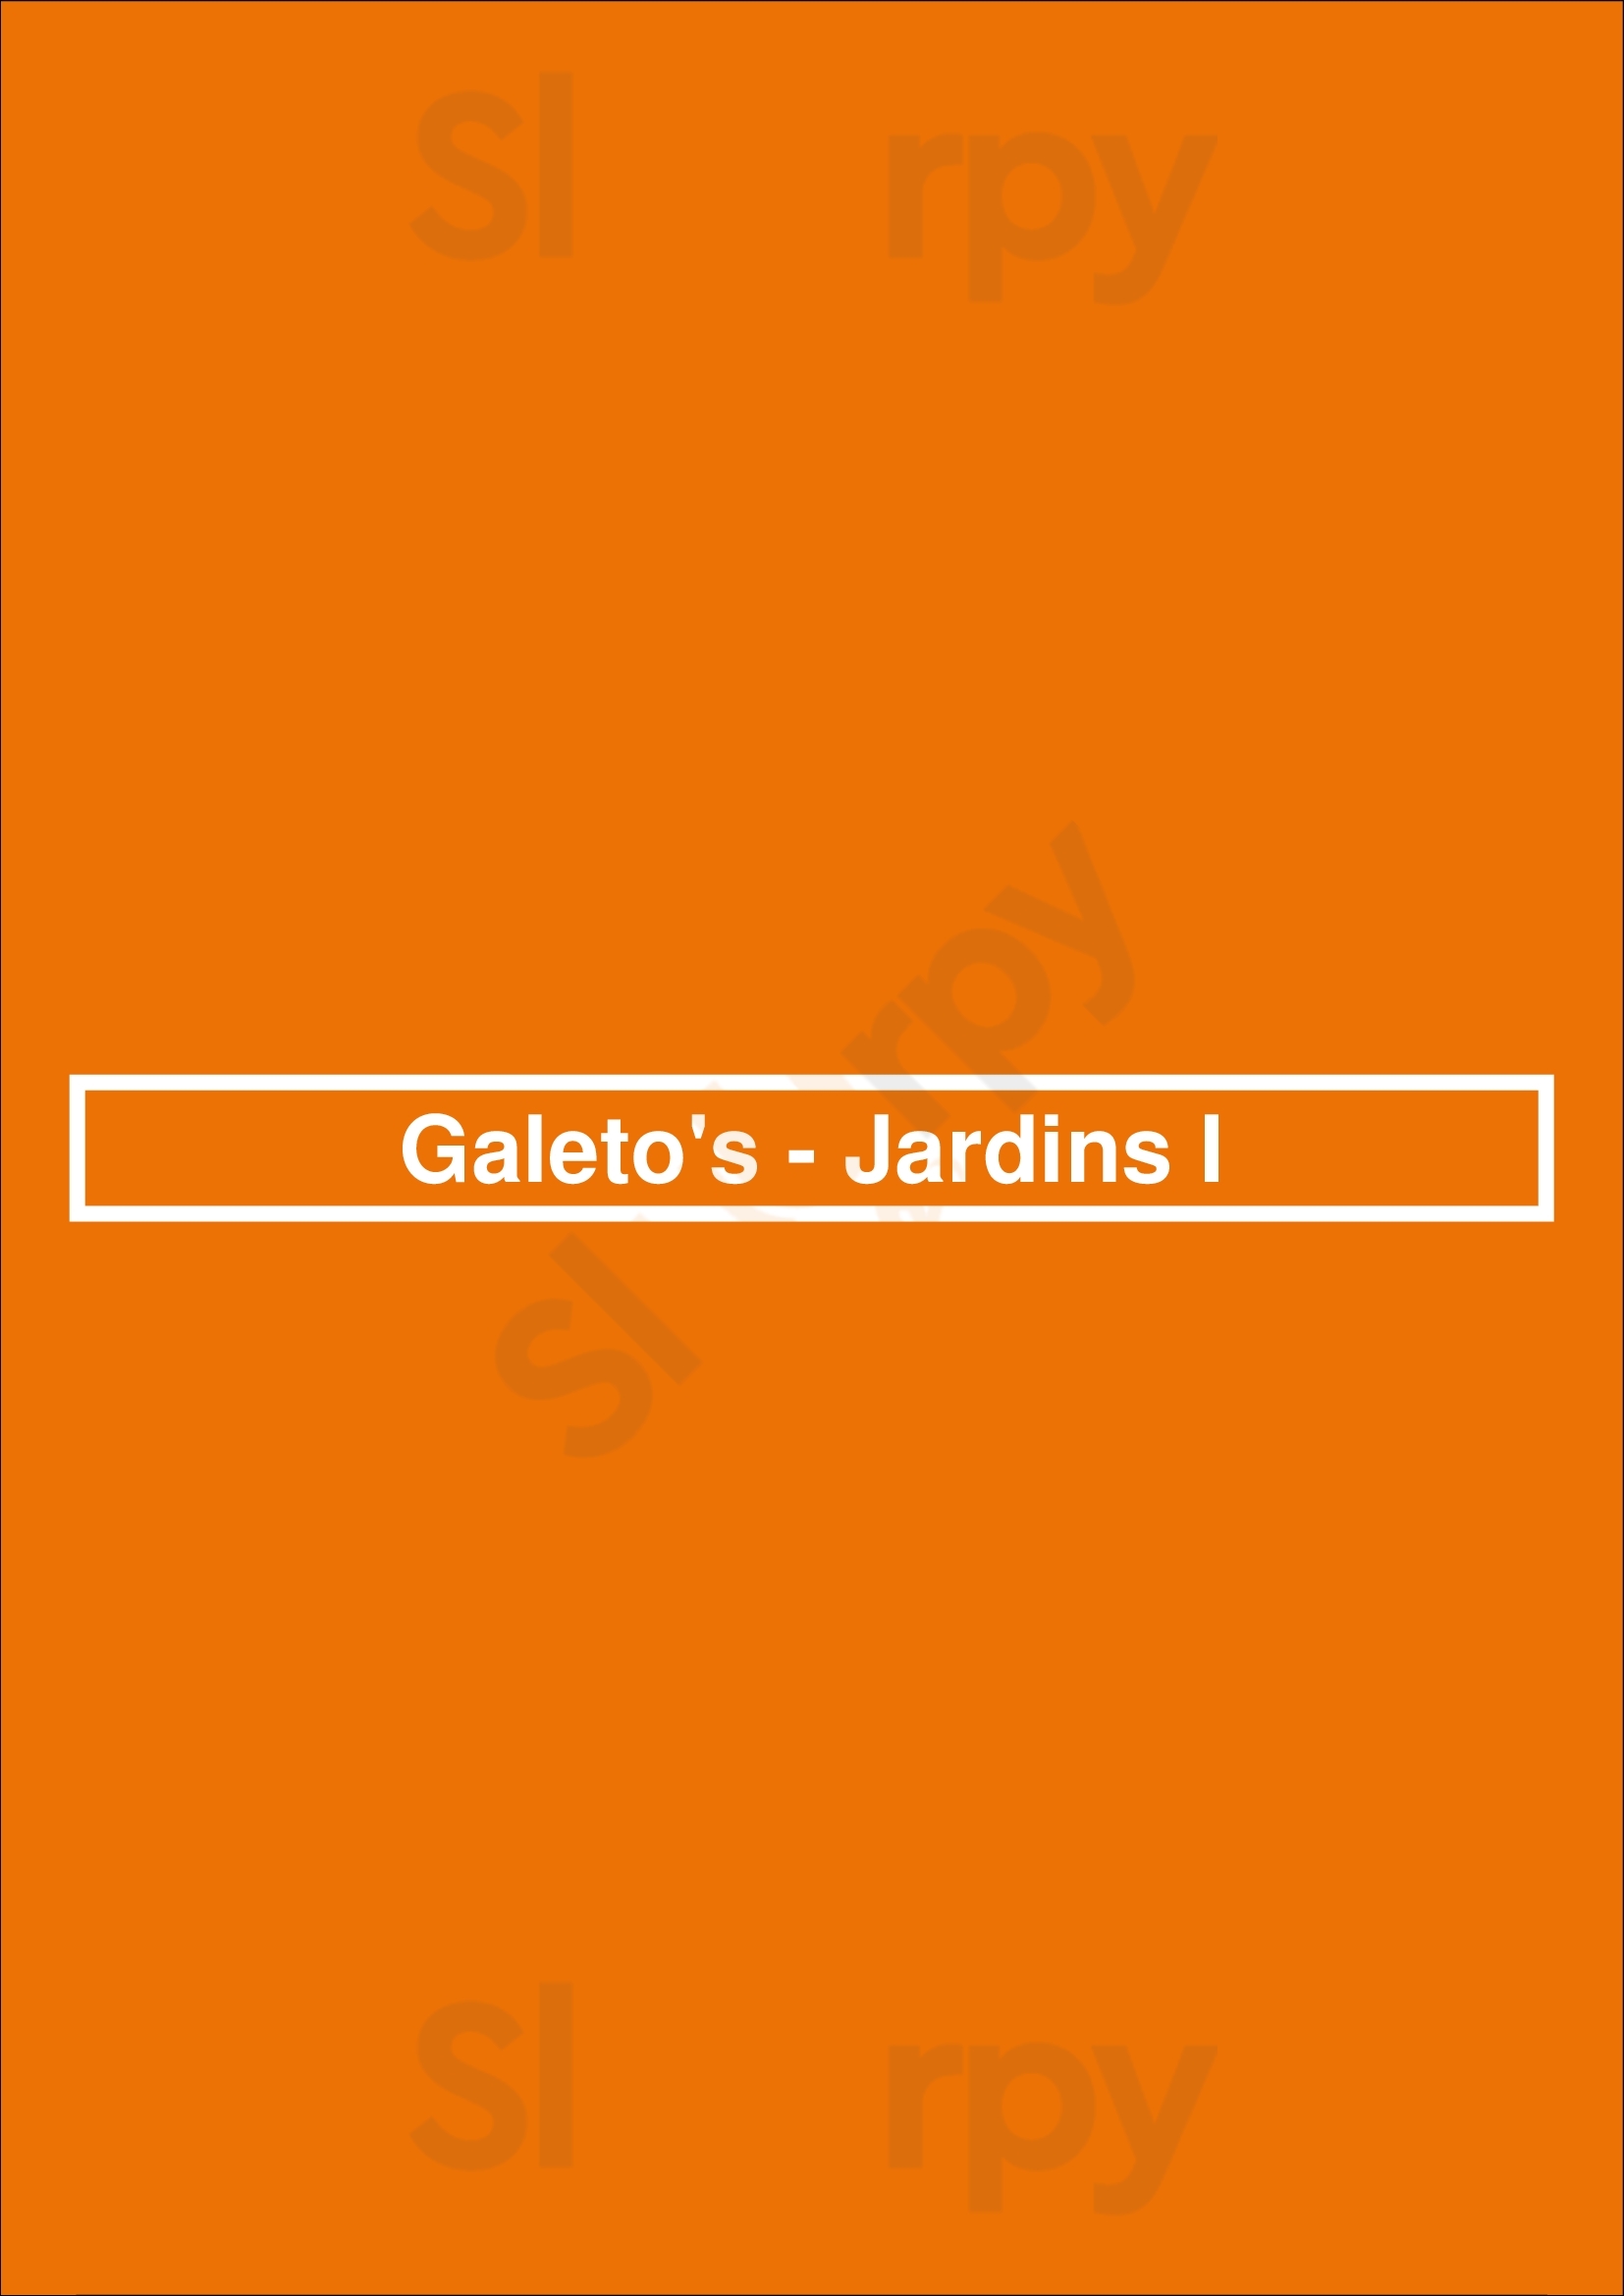 Galeto's - Jardins I São Paulo Menu - 1